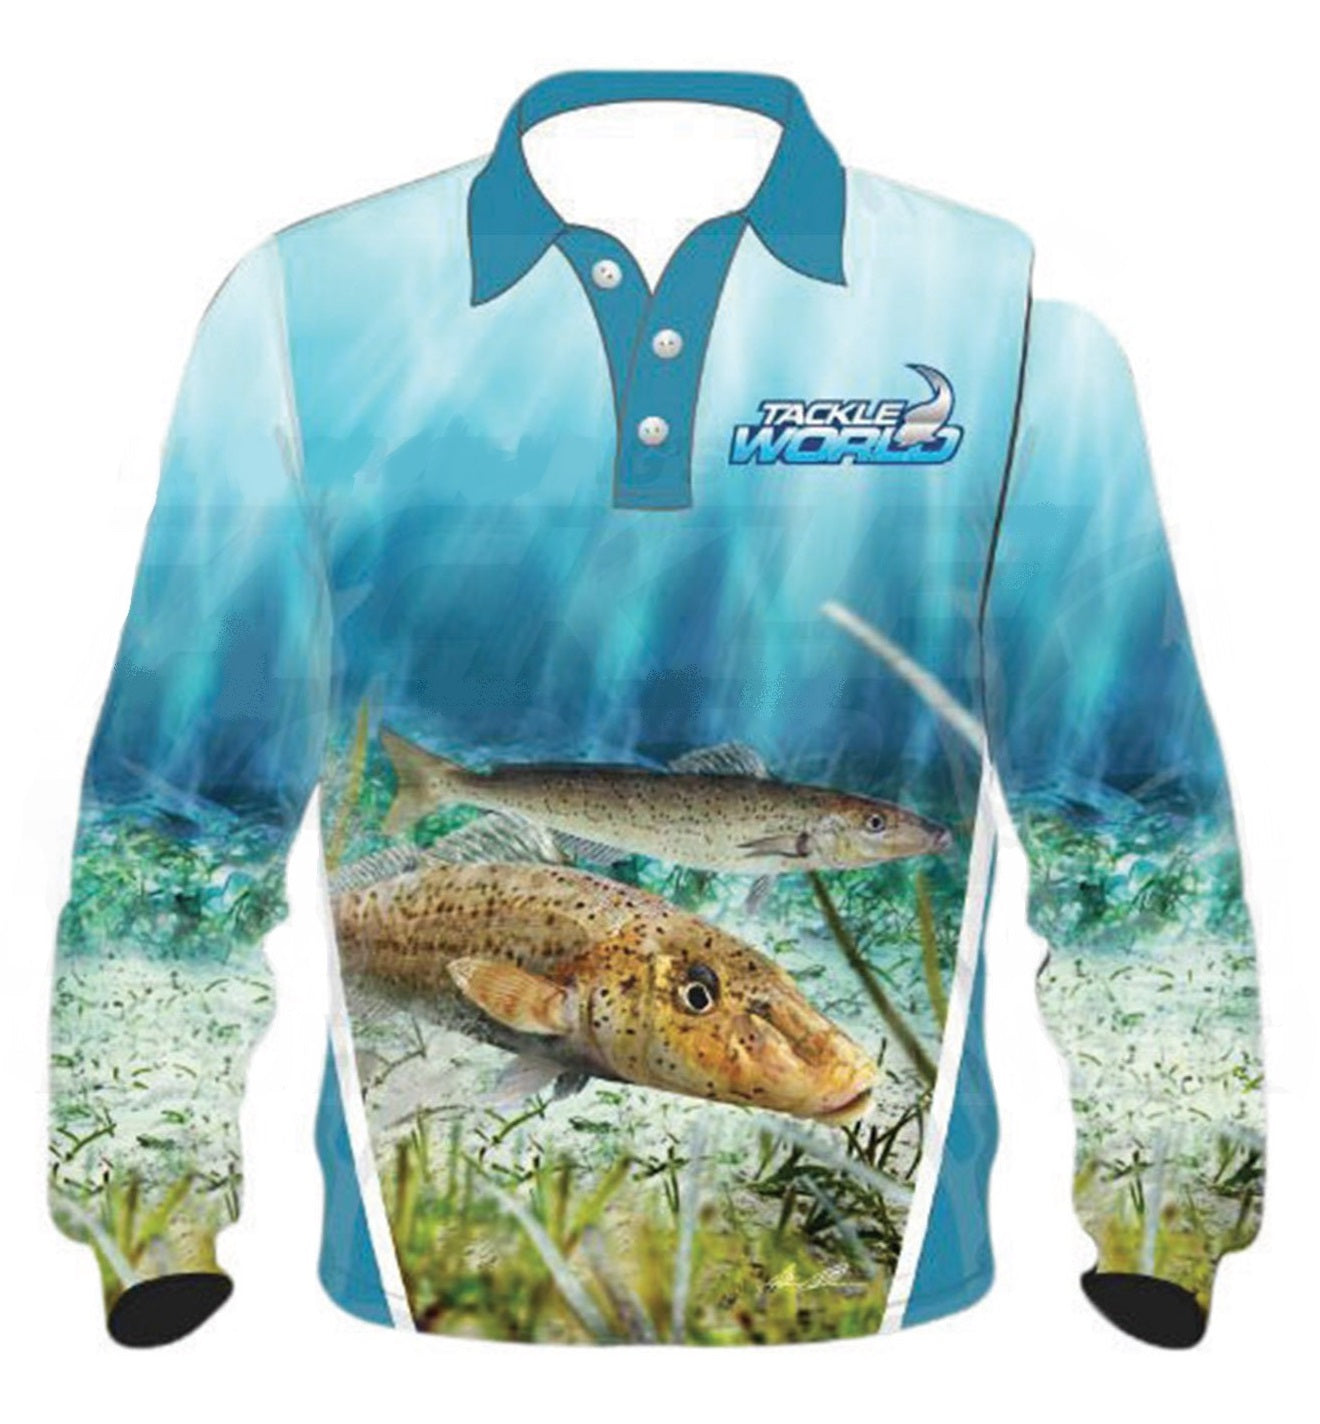 Tackle World Whiting Adult Long Sleeve Fishing Shirt Jersey